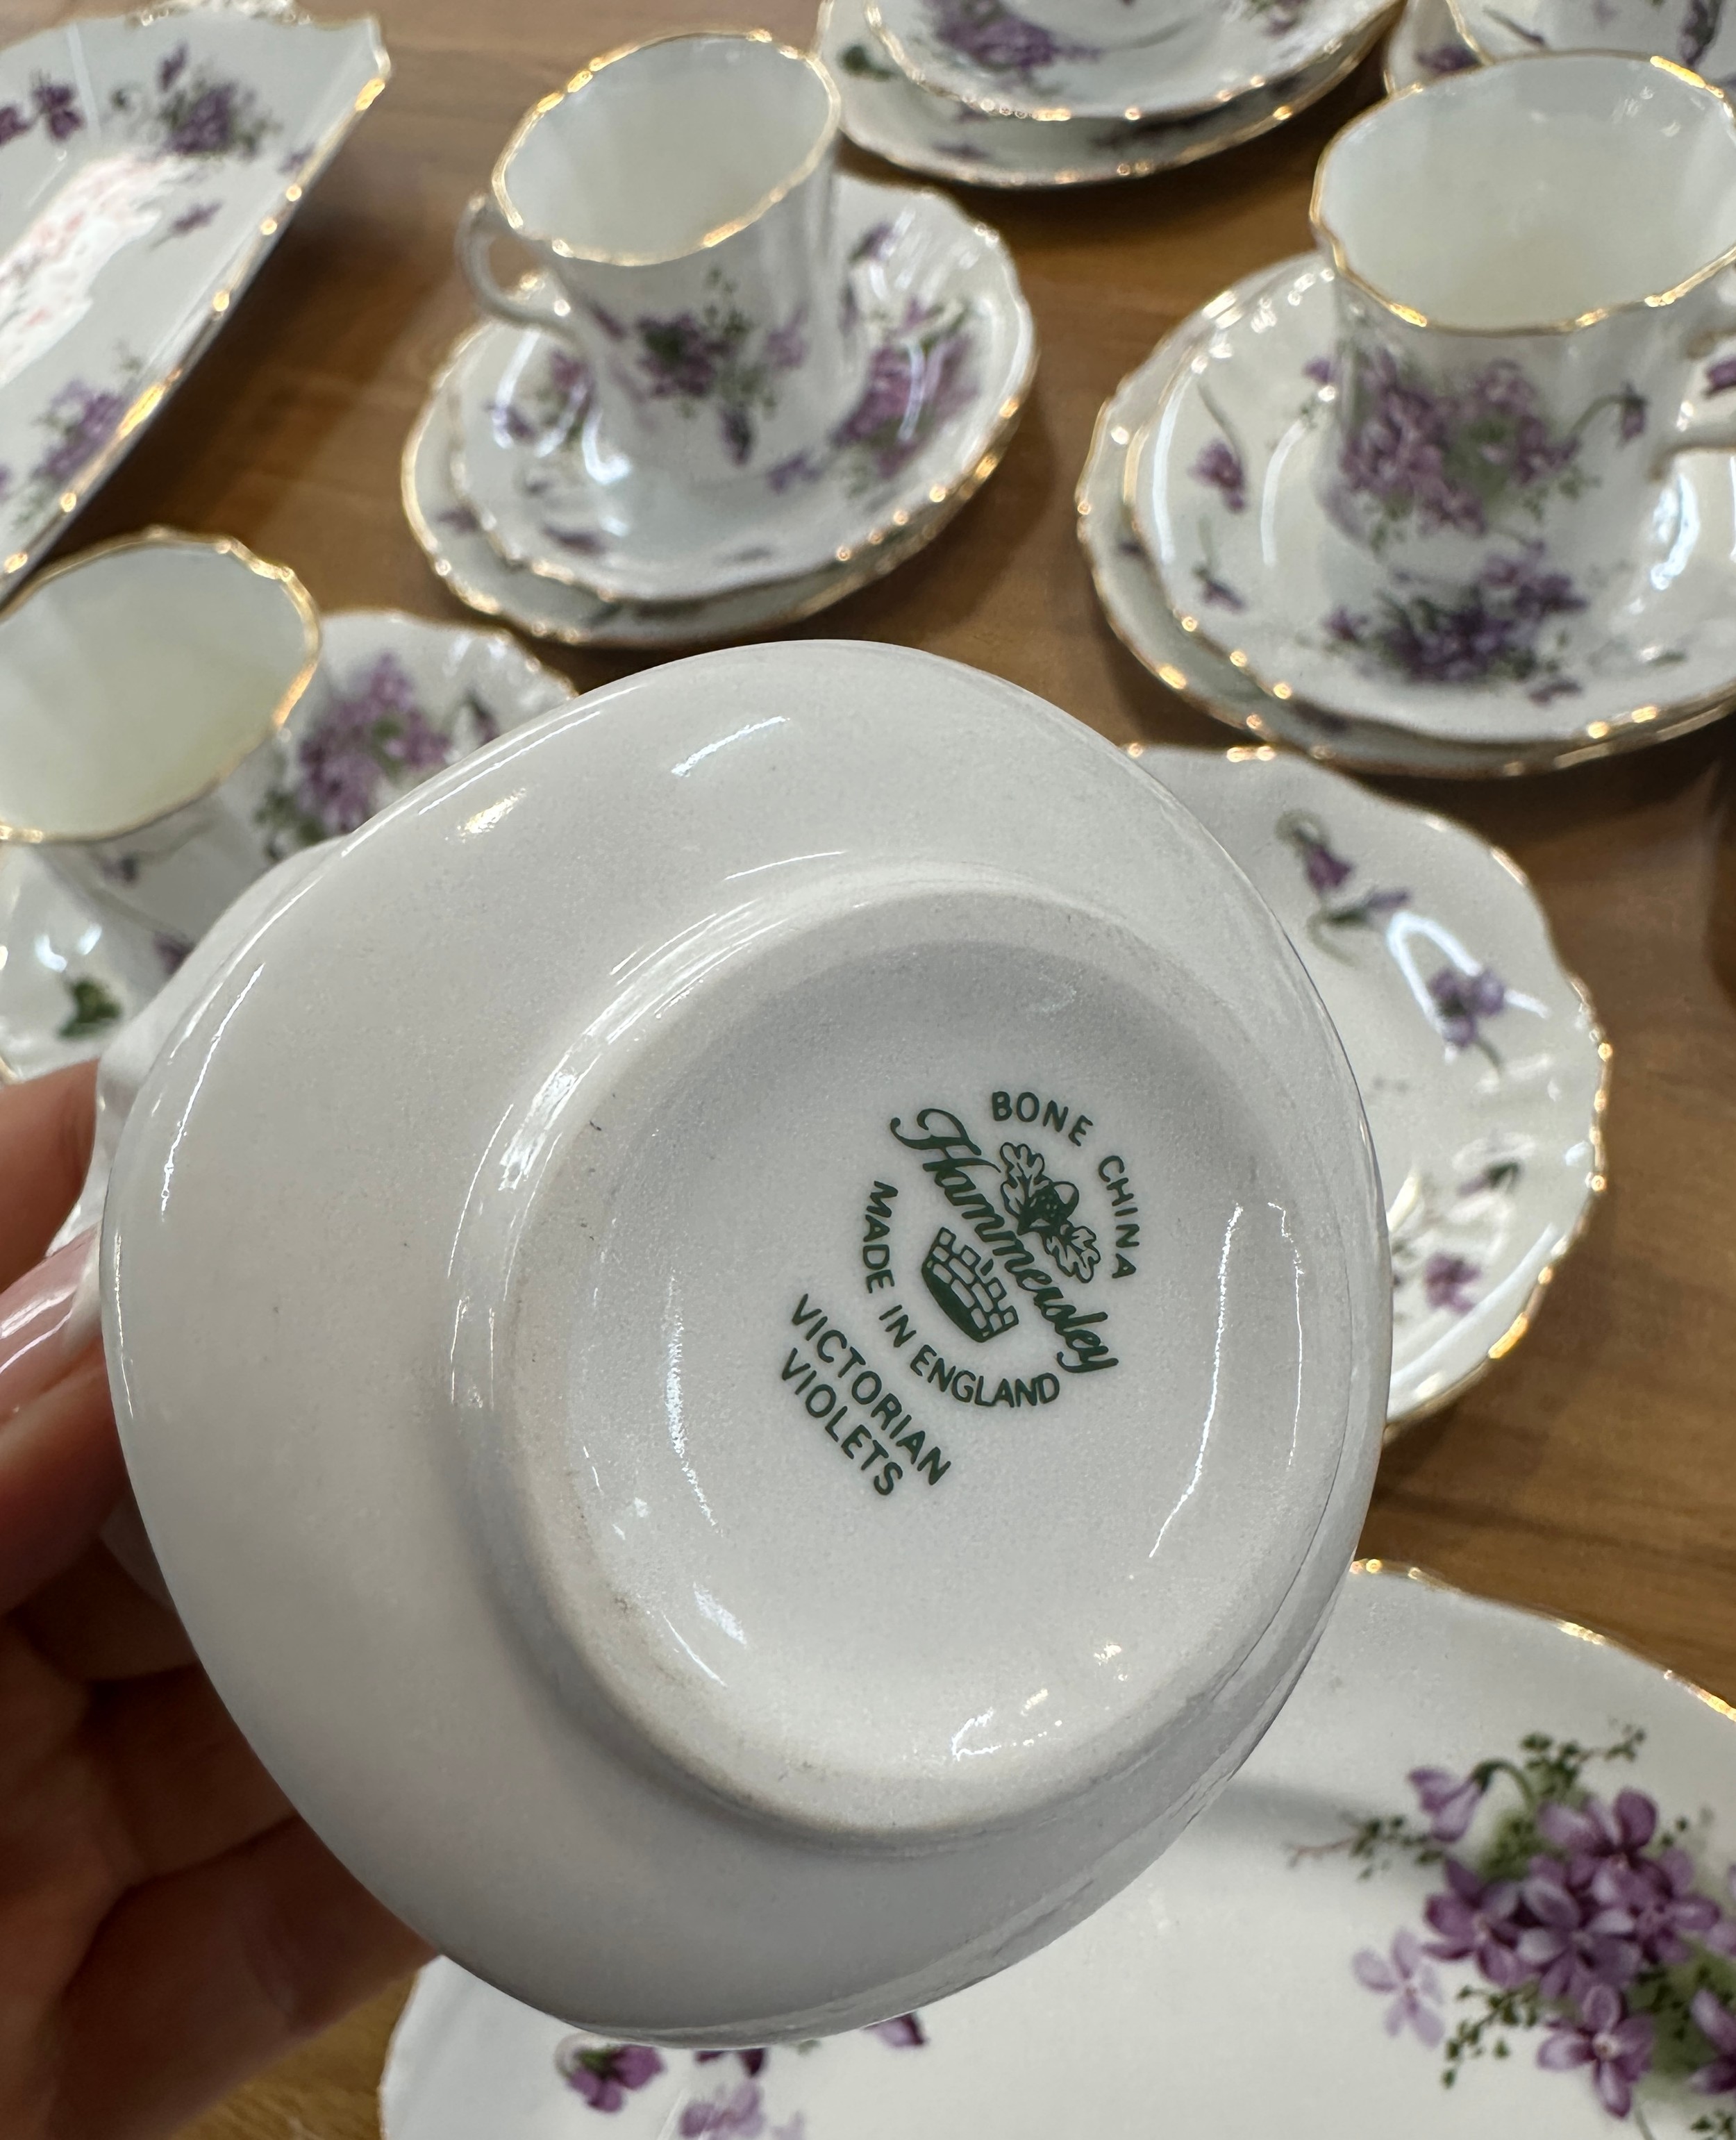 Six piece part Hammersley tea service victorian violets includes cups, saucers, milk jug etc - Image 4 of 4